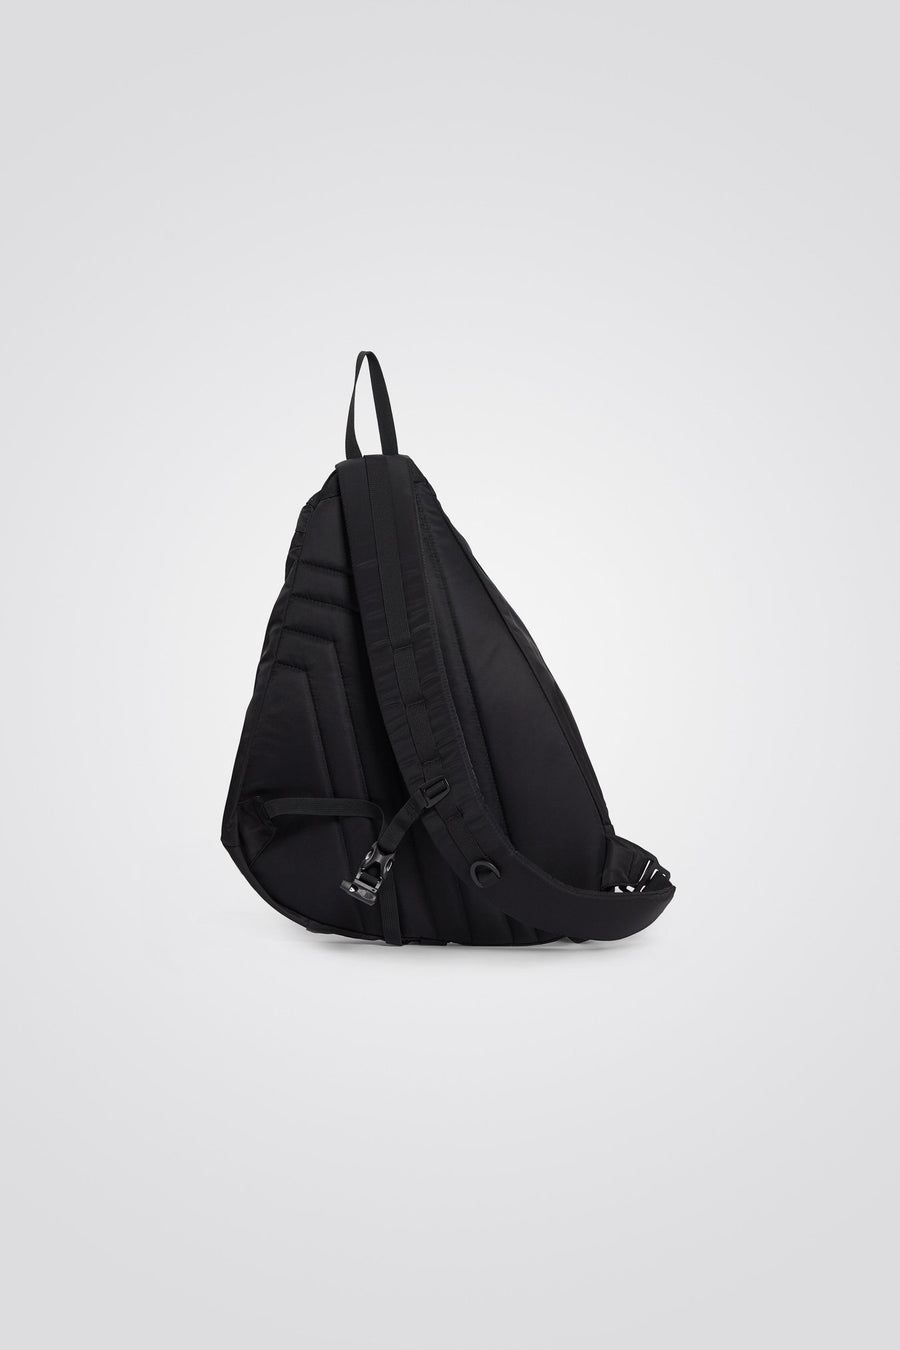 Tri-Point Bag Black